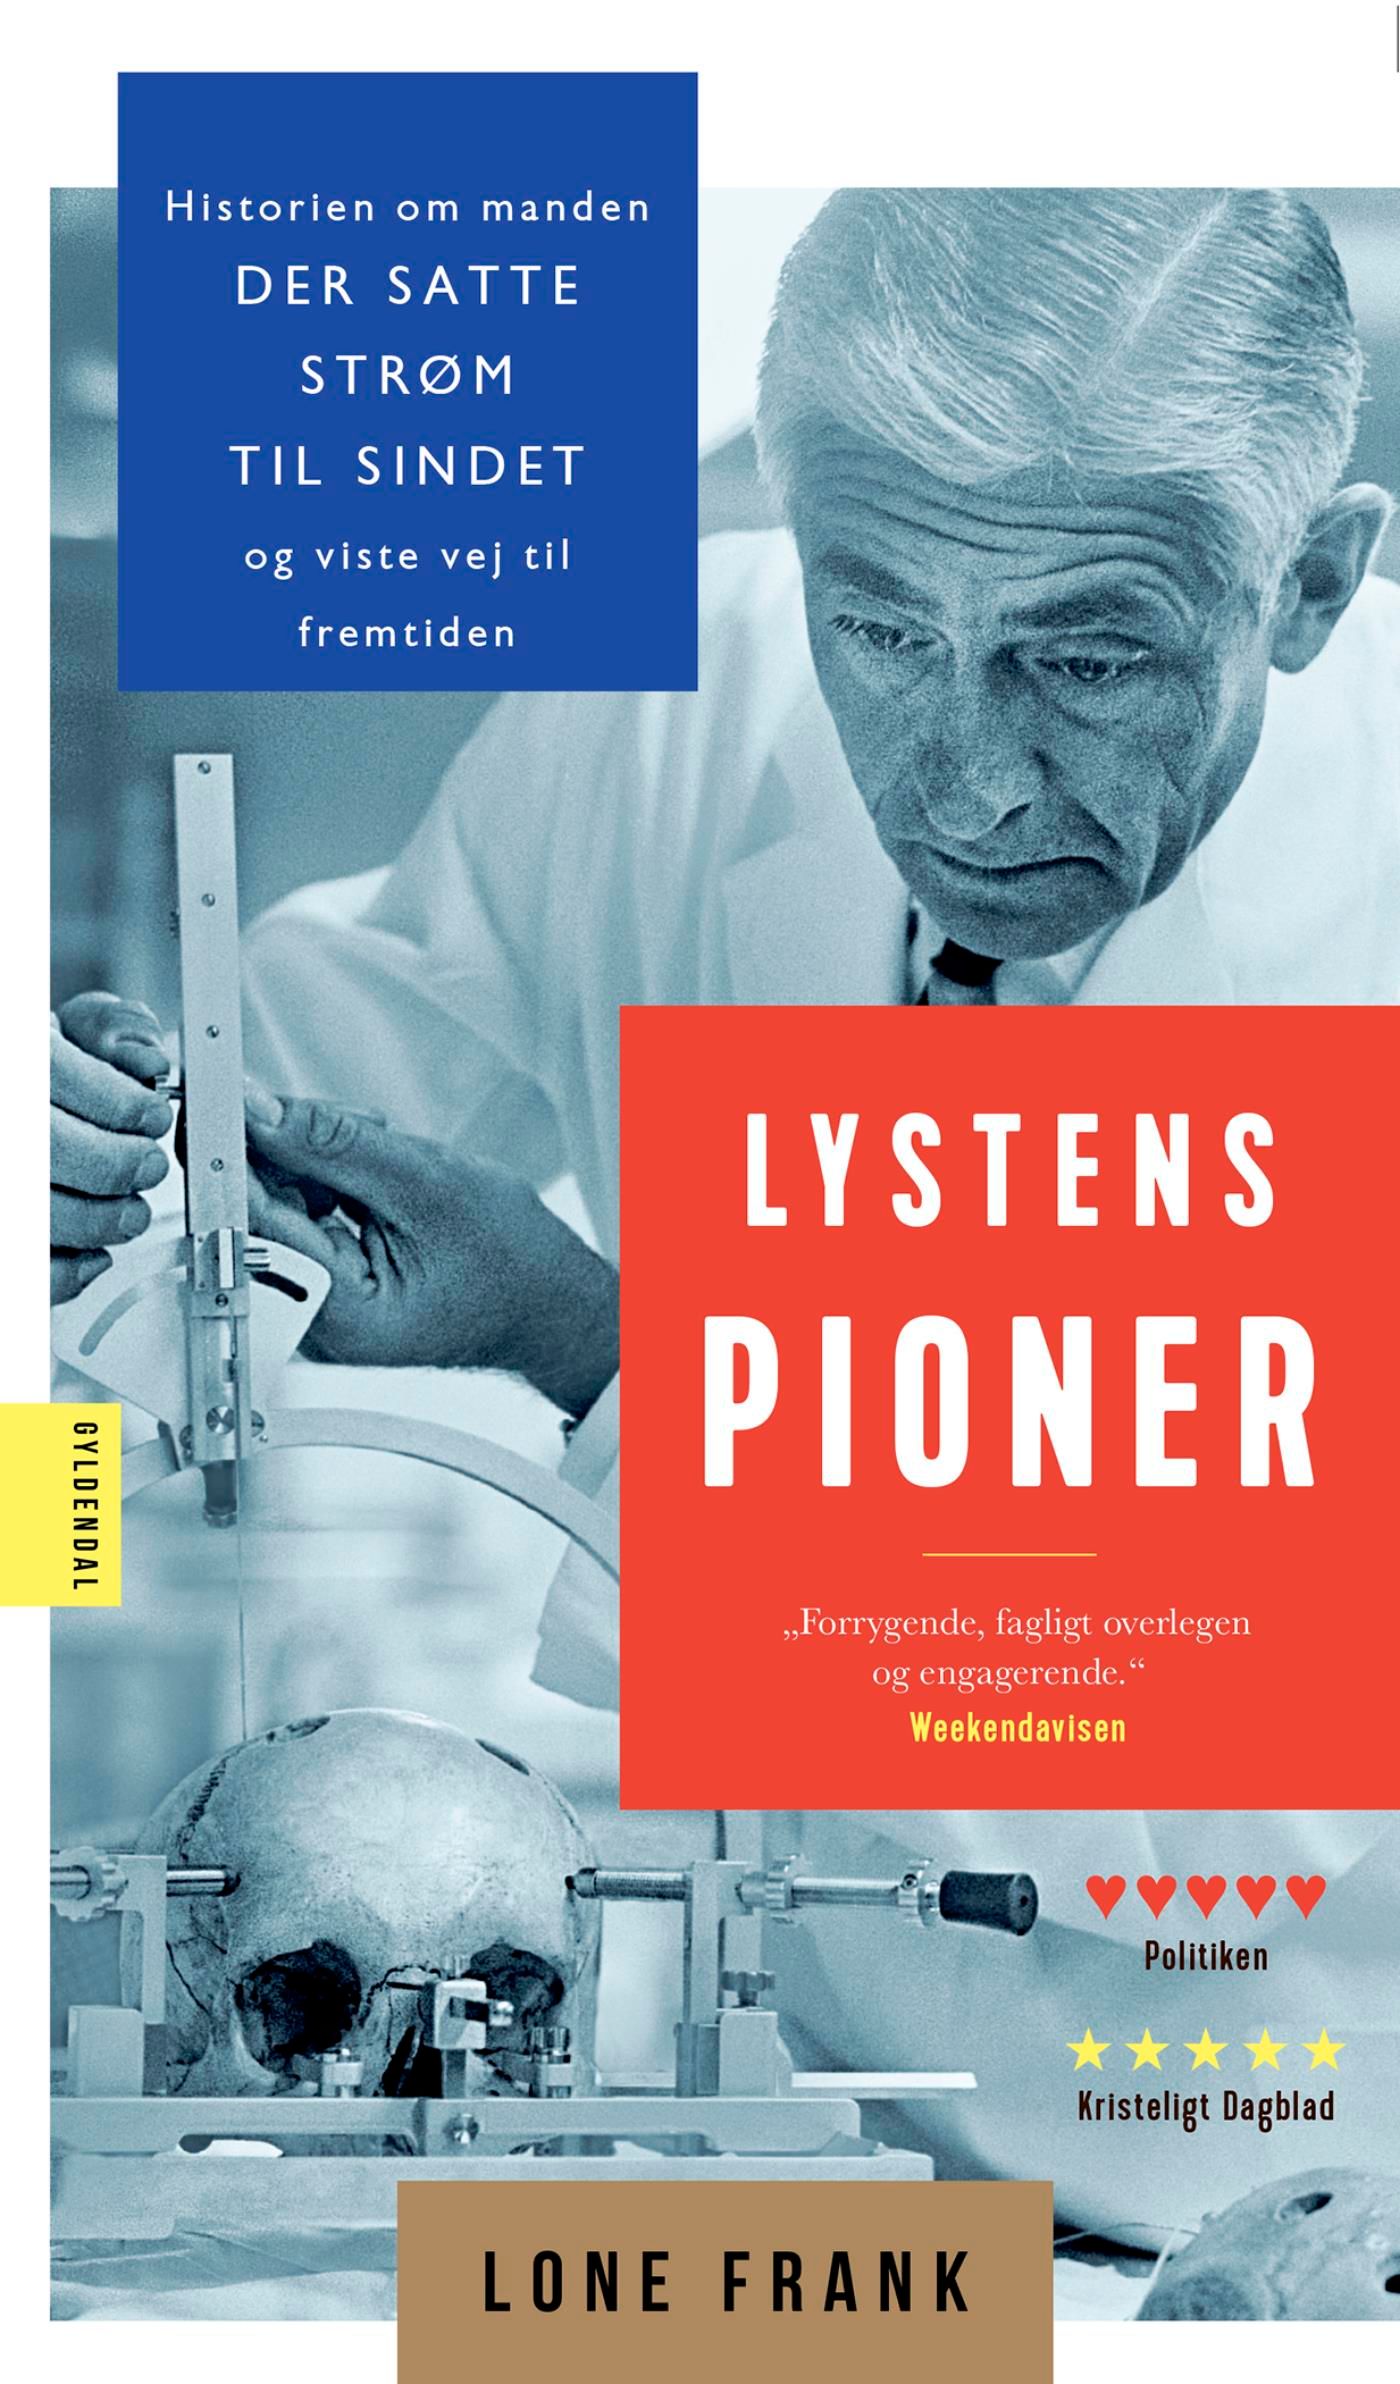 Lystens pioner, eBook by Lone Frank